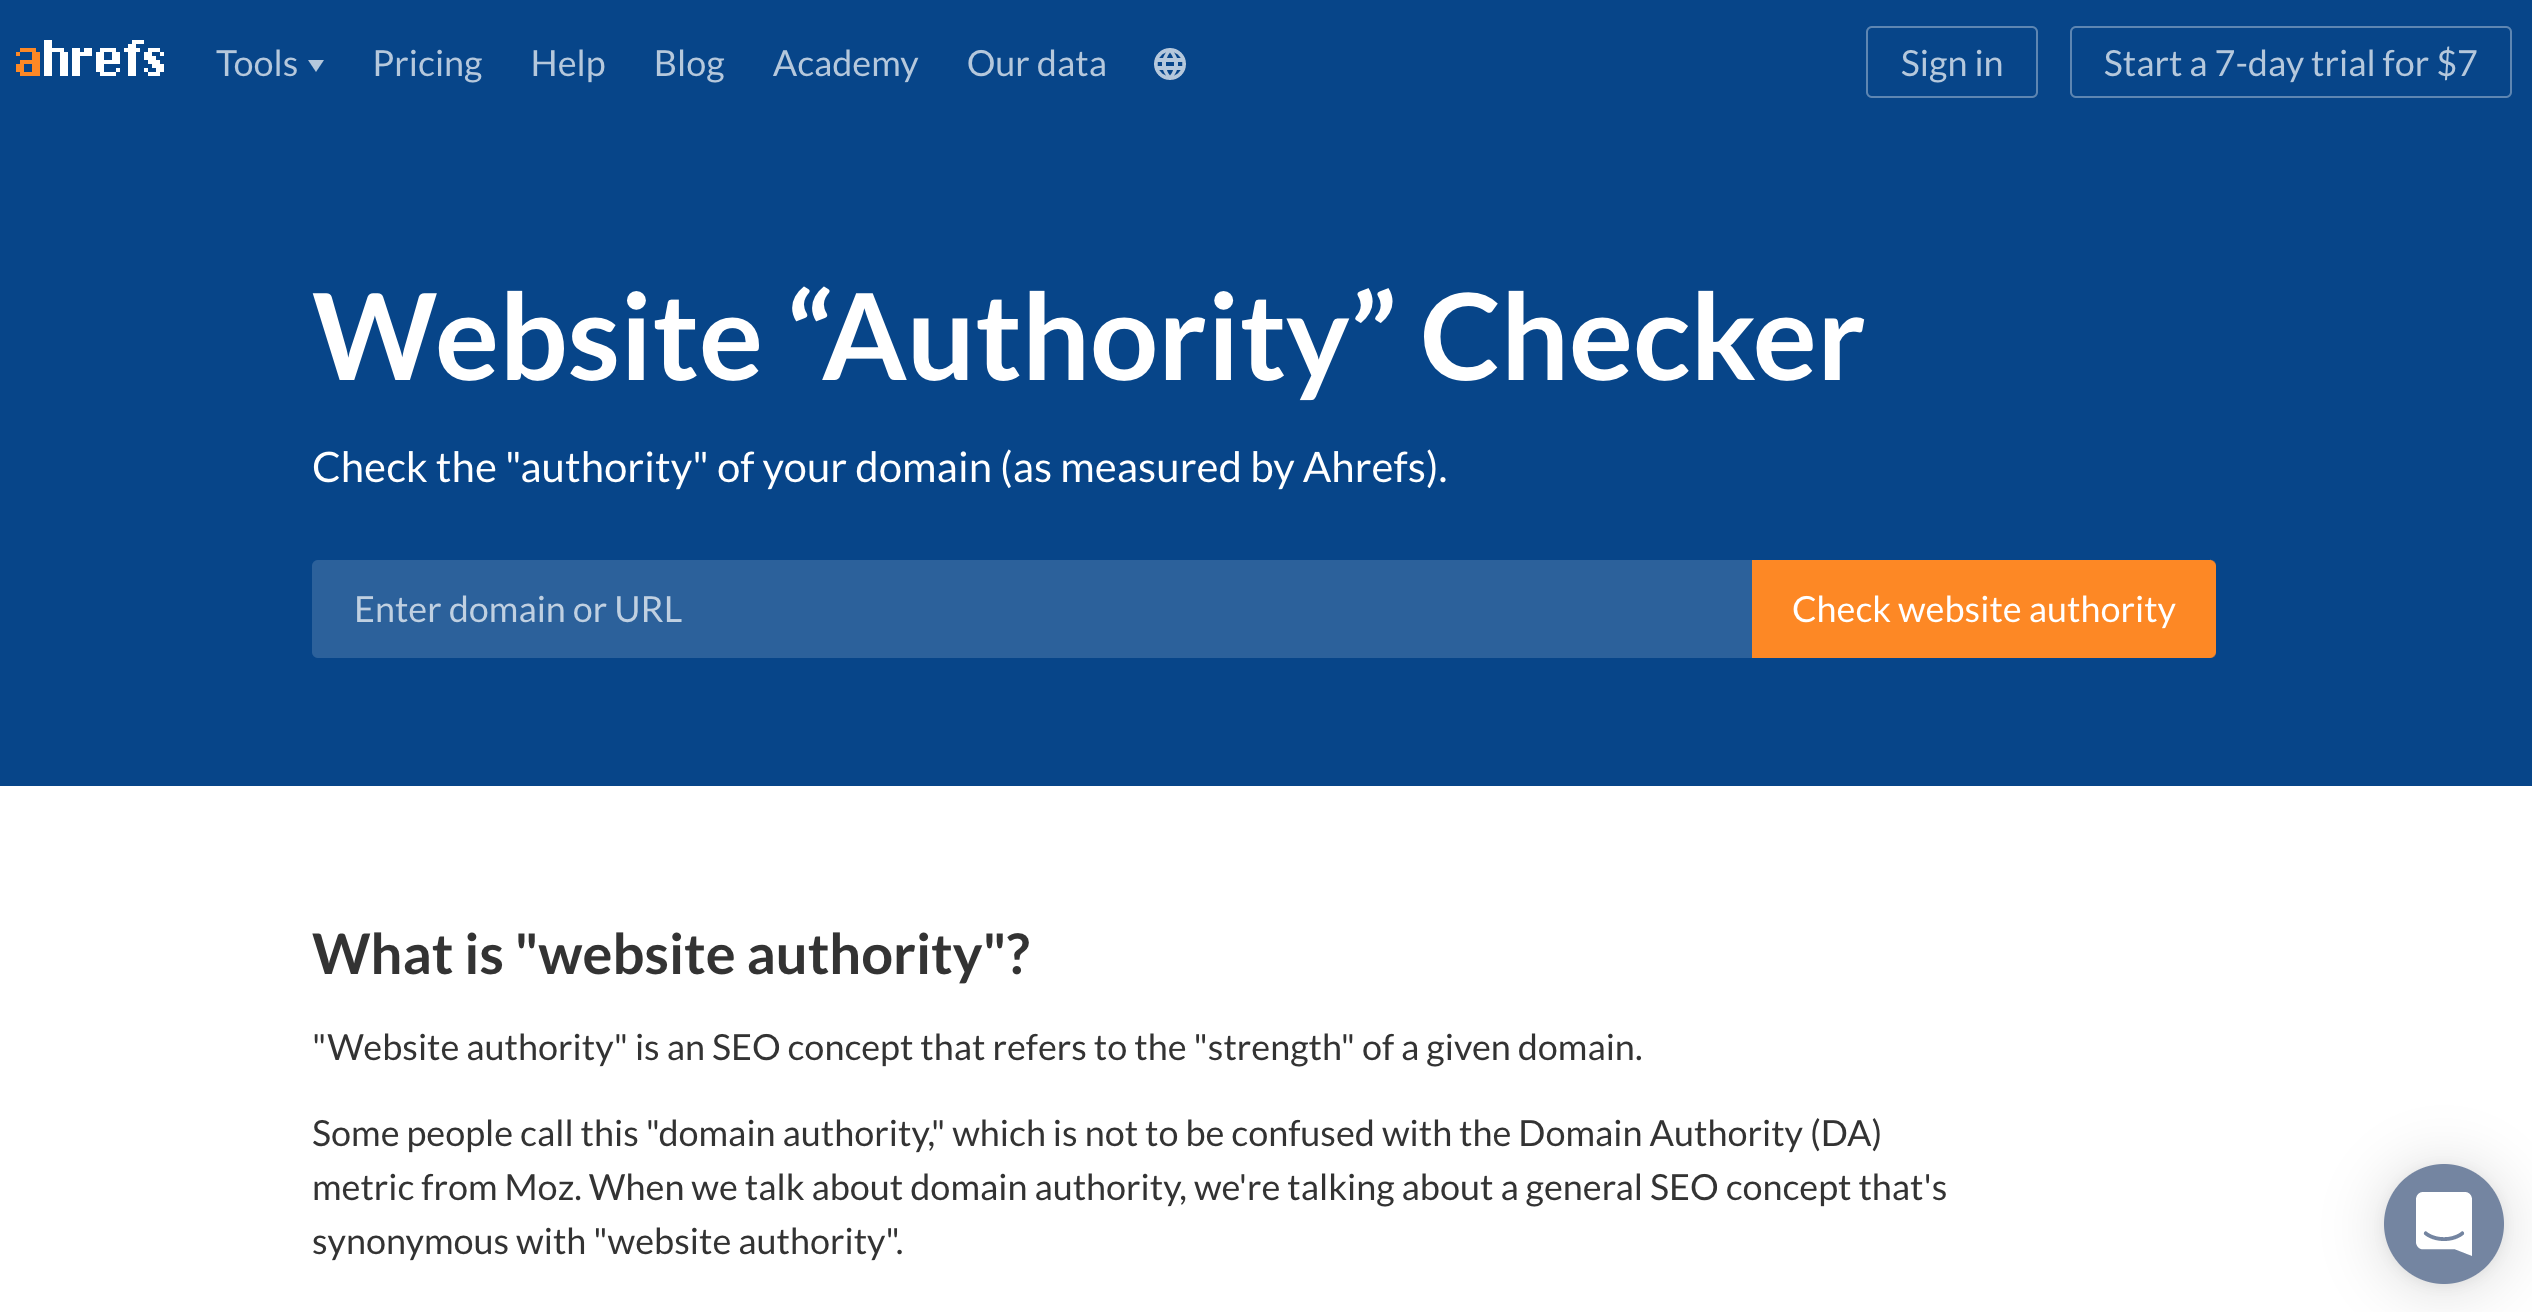 Ahref's website "authority" checker